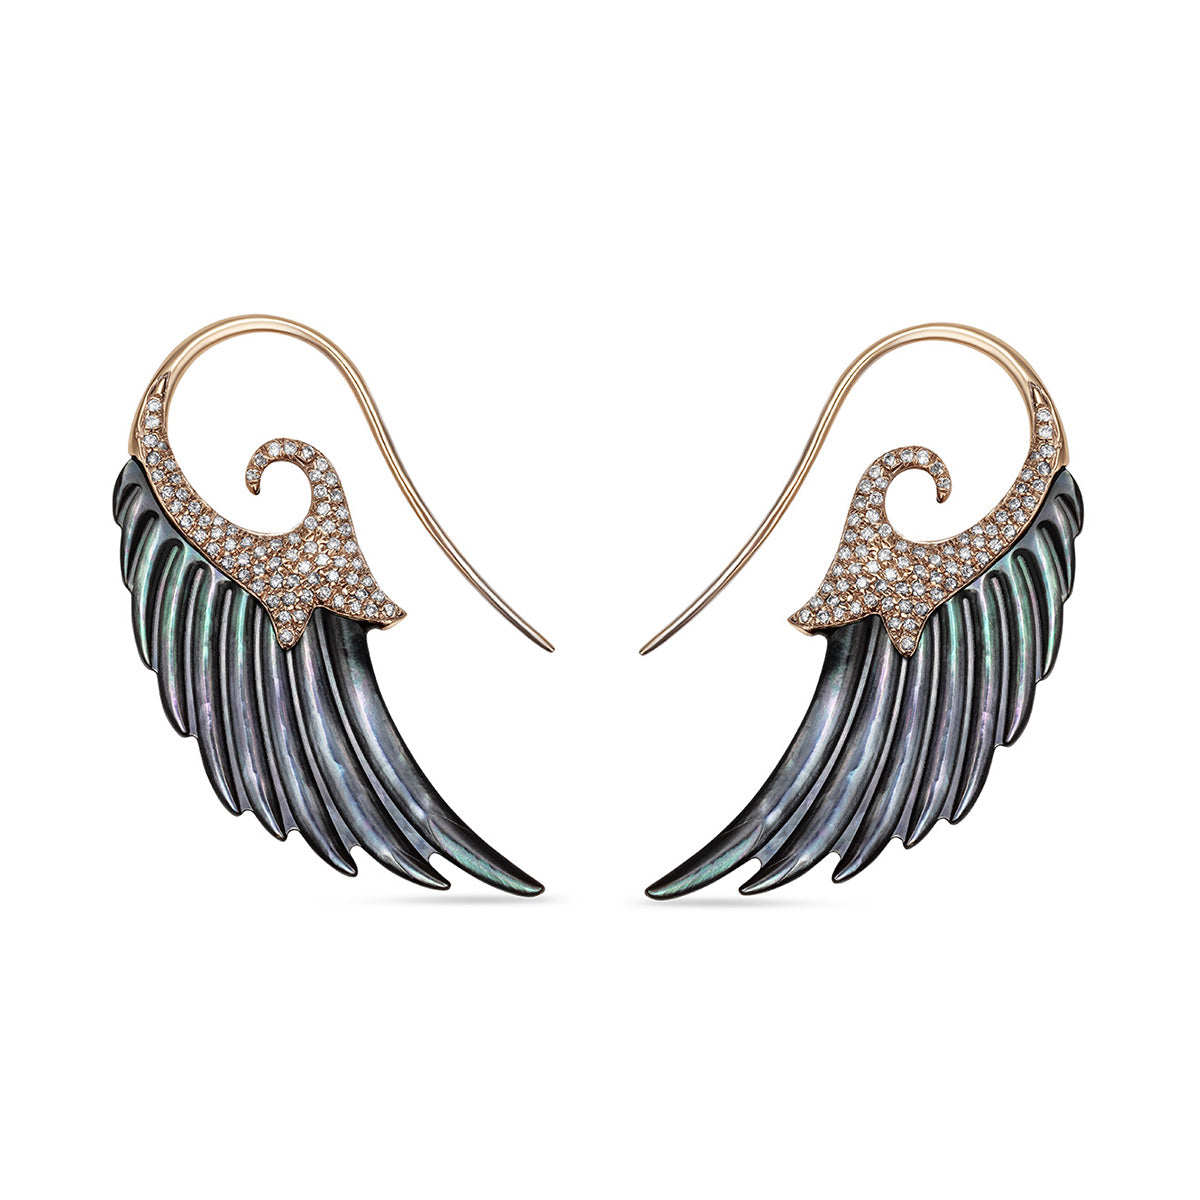 Noor Fares 18K Grey Gold Black Mother of Pearl Wings Earrings set with Diamonds